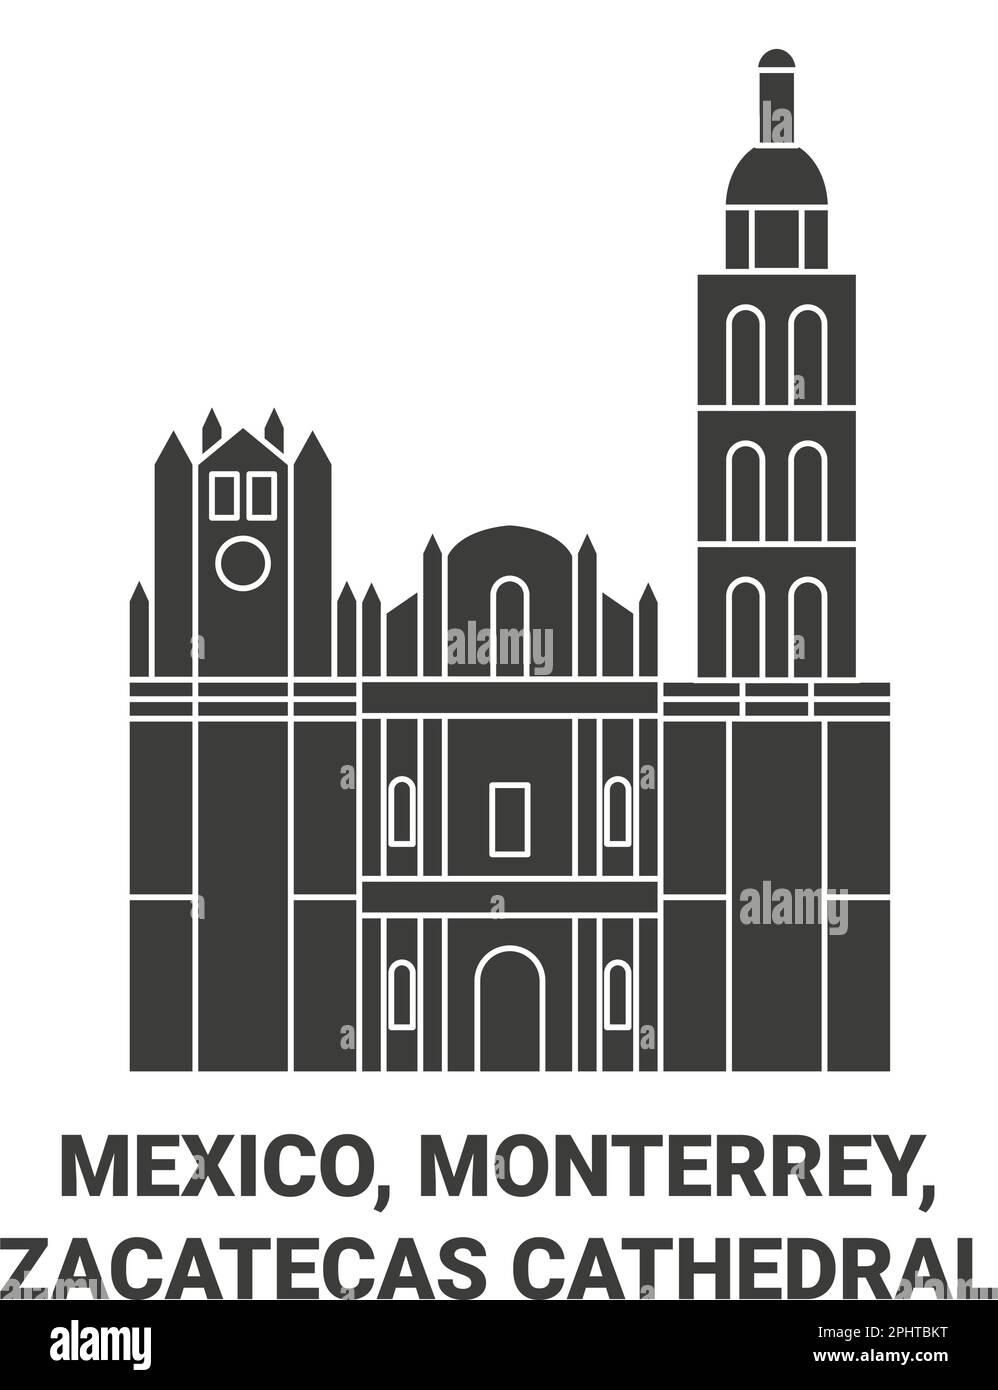 Mexico, Monterrey, Zacatecas Cathedral travel landmark vector illustration Stock Vector